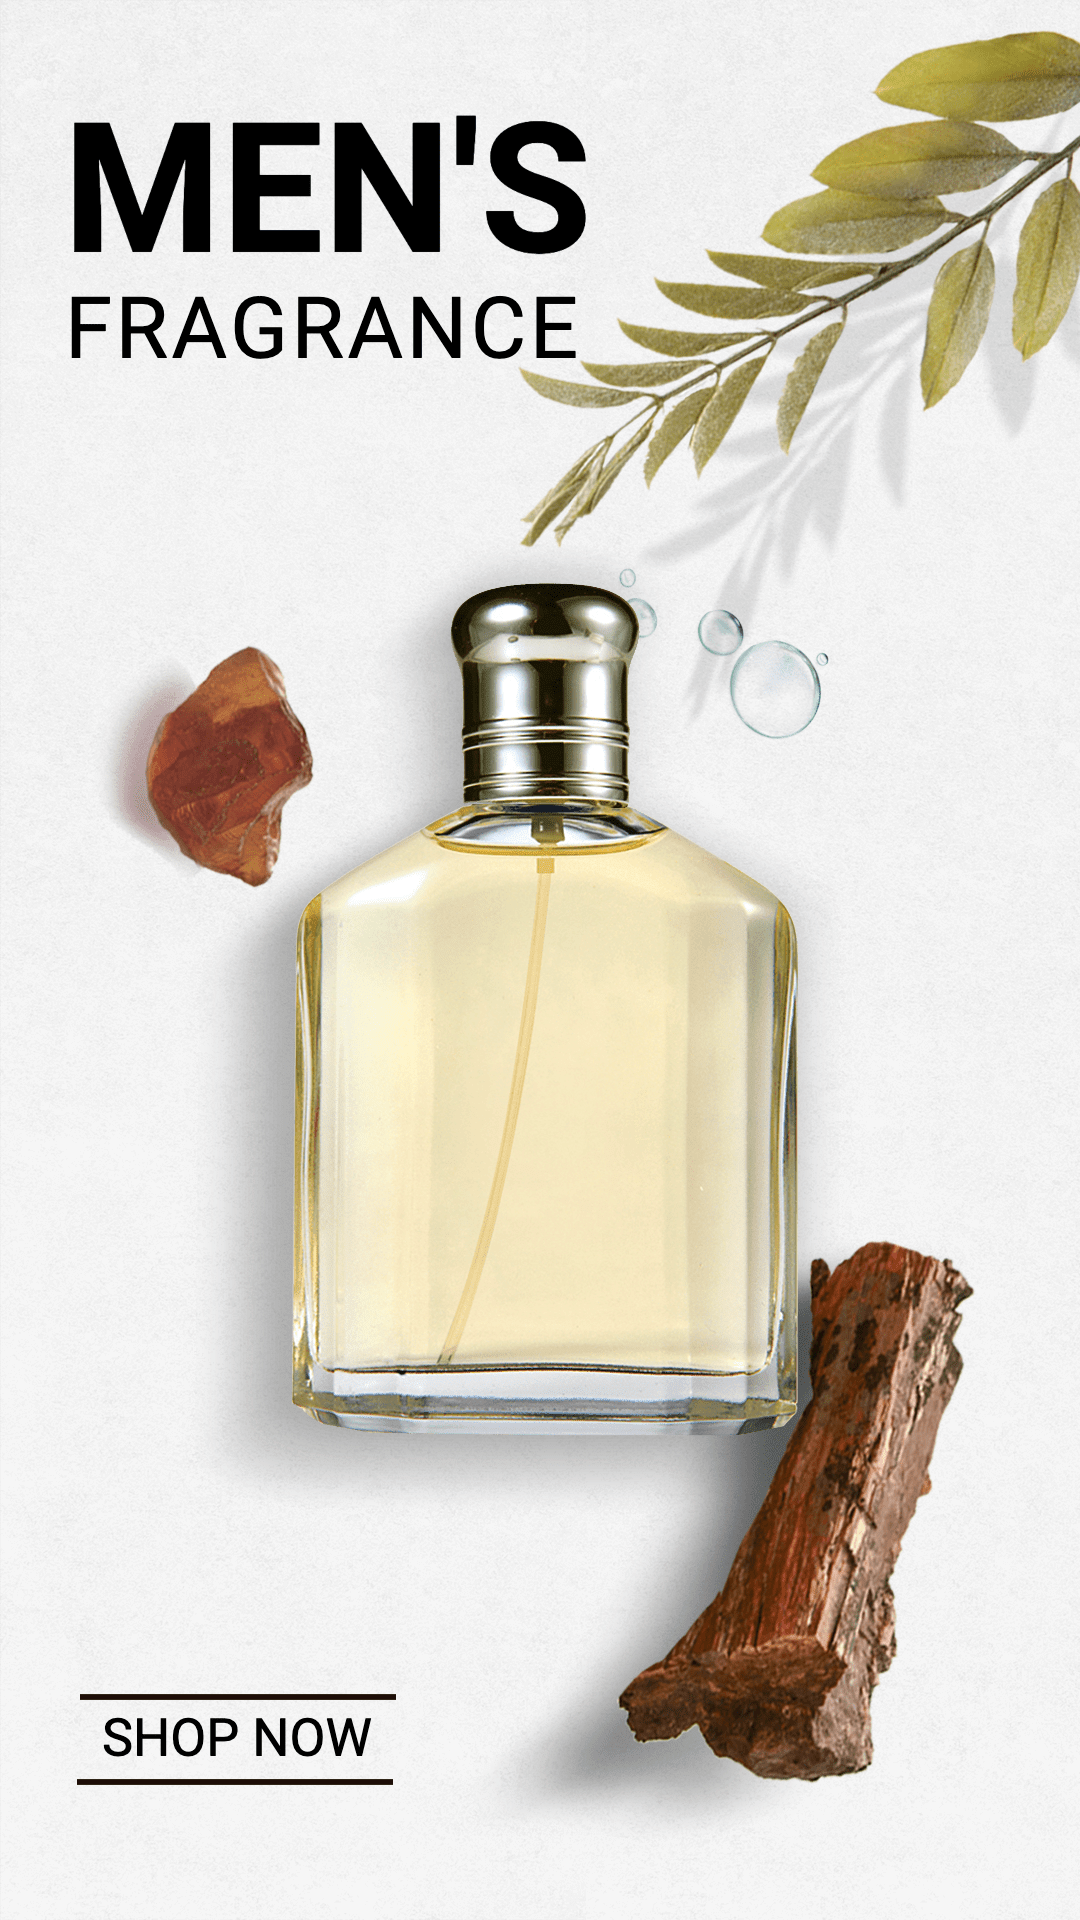 Leaf Element Men's Perfume Fragrance Sale Promotion Ecommerce Story预览效果